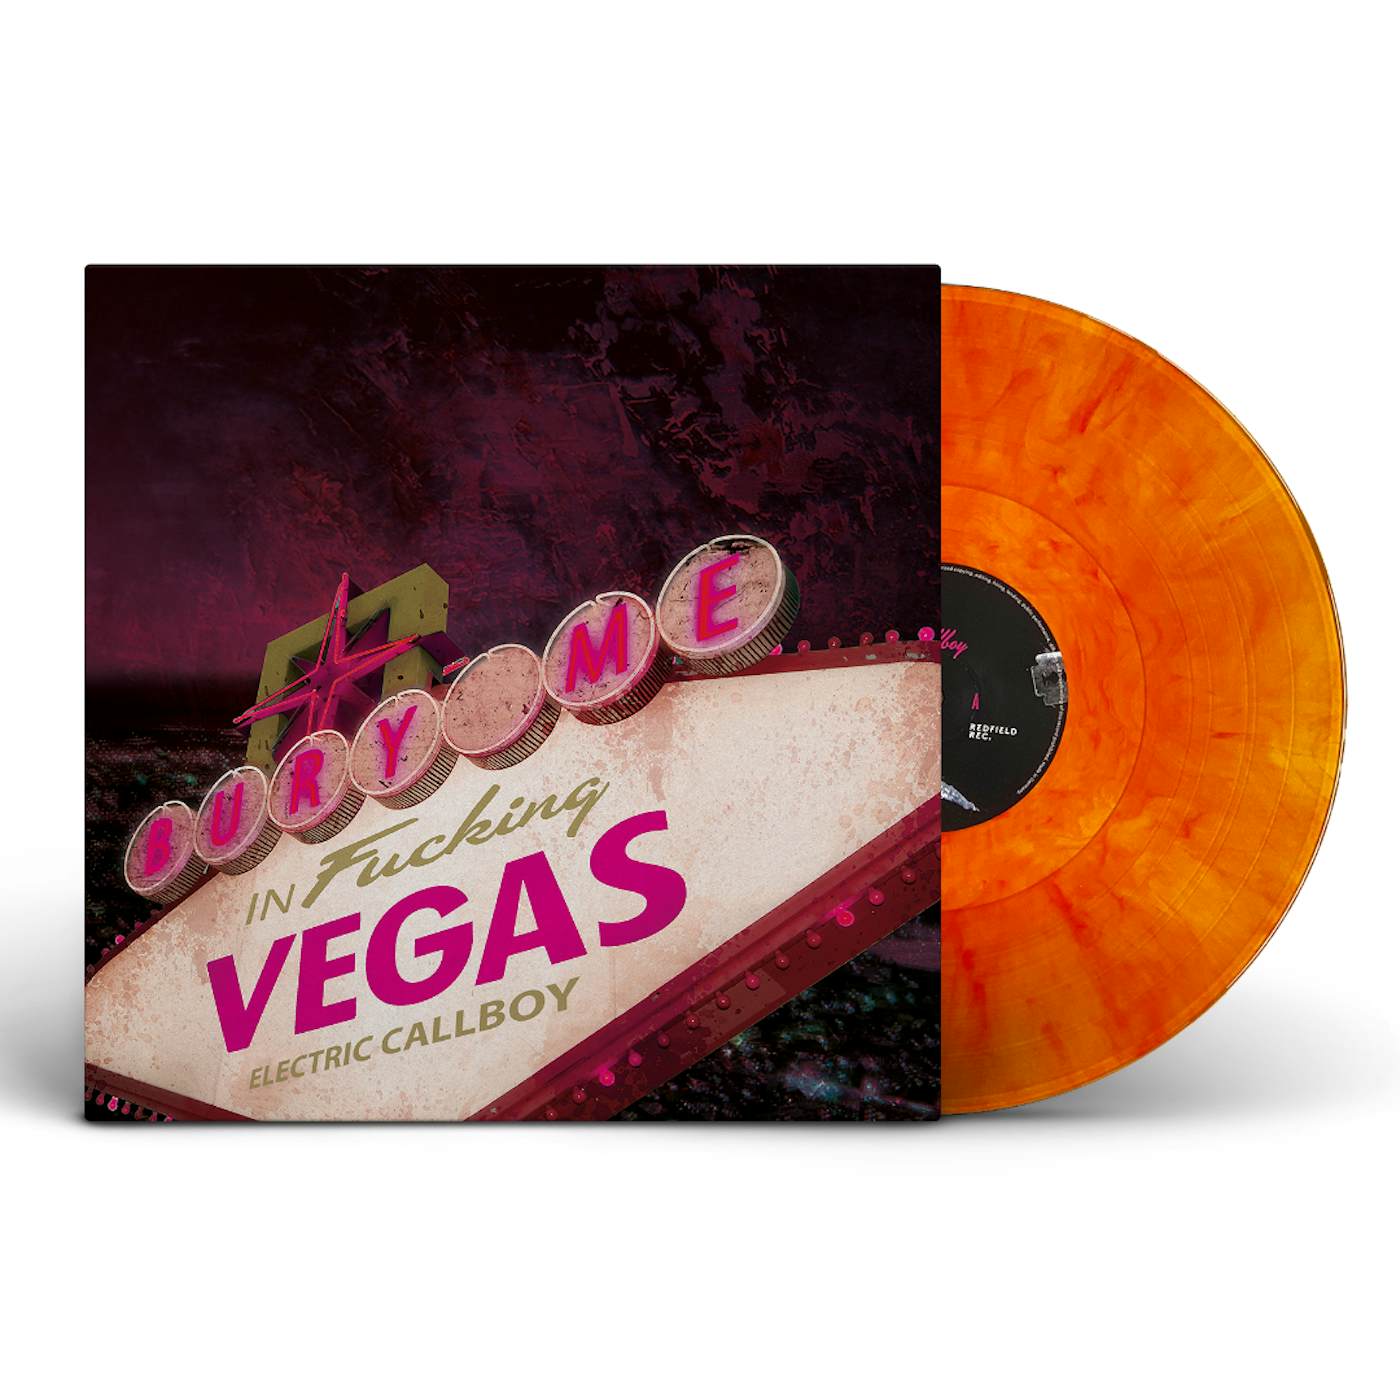 Electric Callboy - Bury Me In Vegas - Vinyl LP (Orange / 2022)